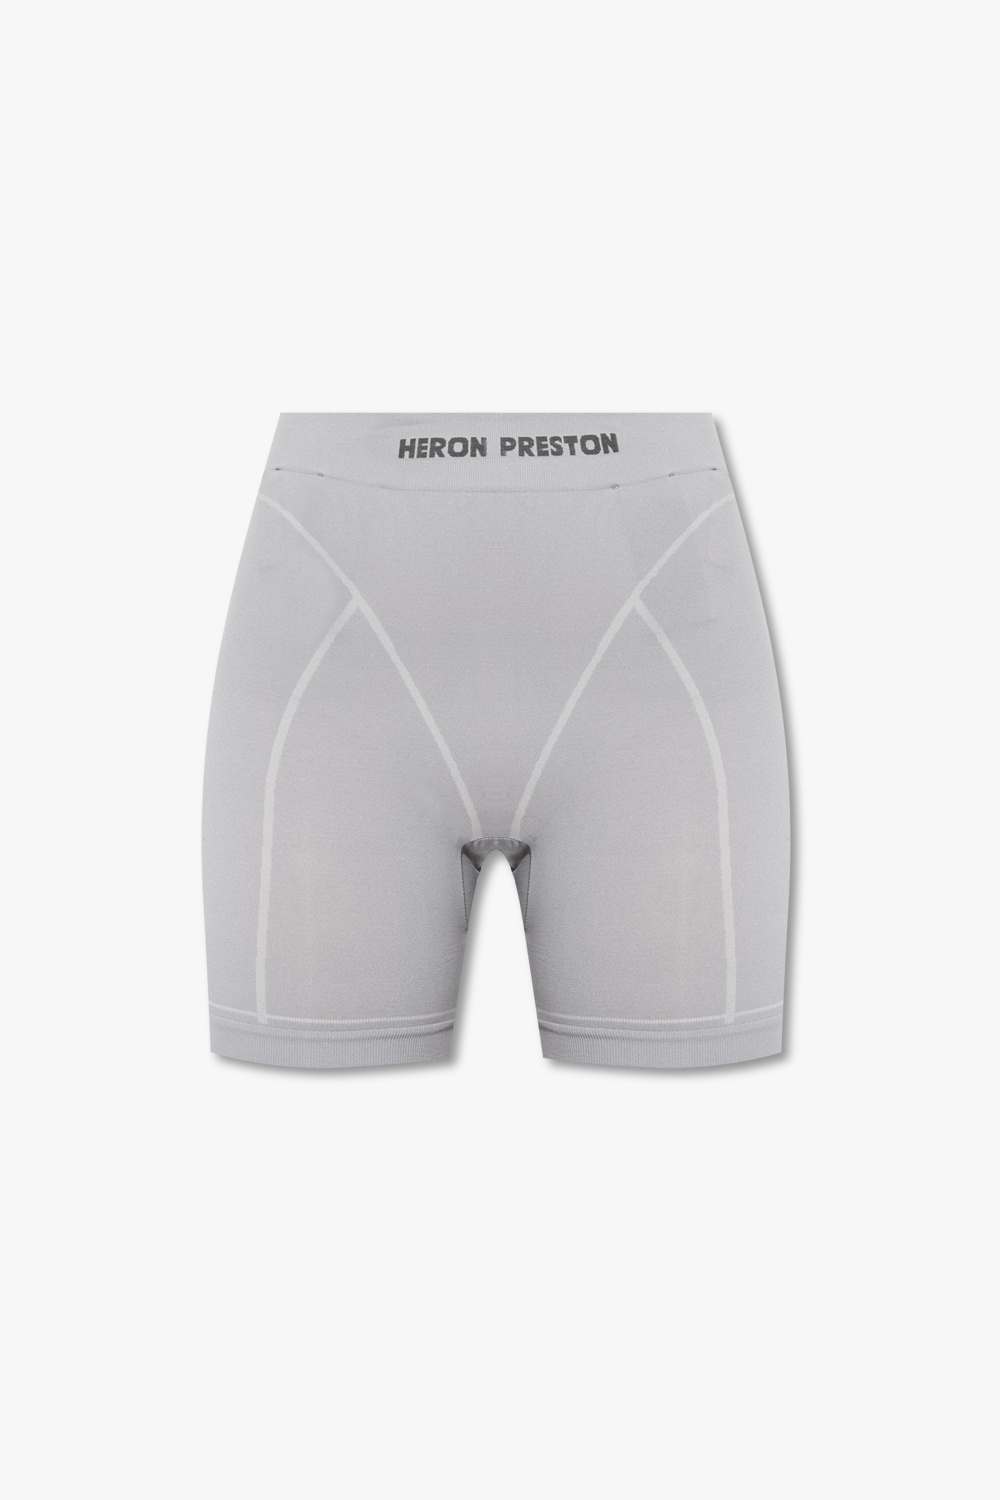 Heron Preston Short sports leggings, GenesinlifeShops